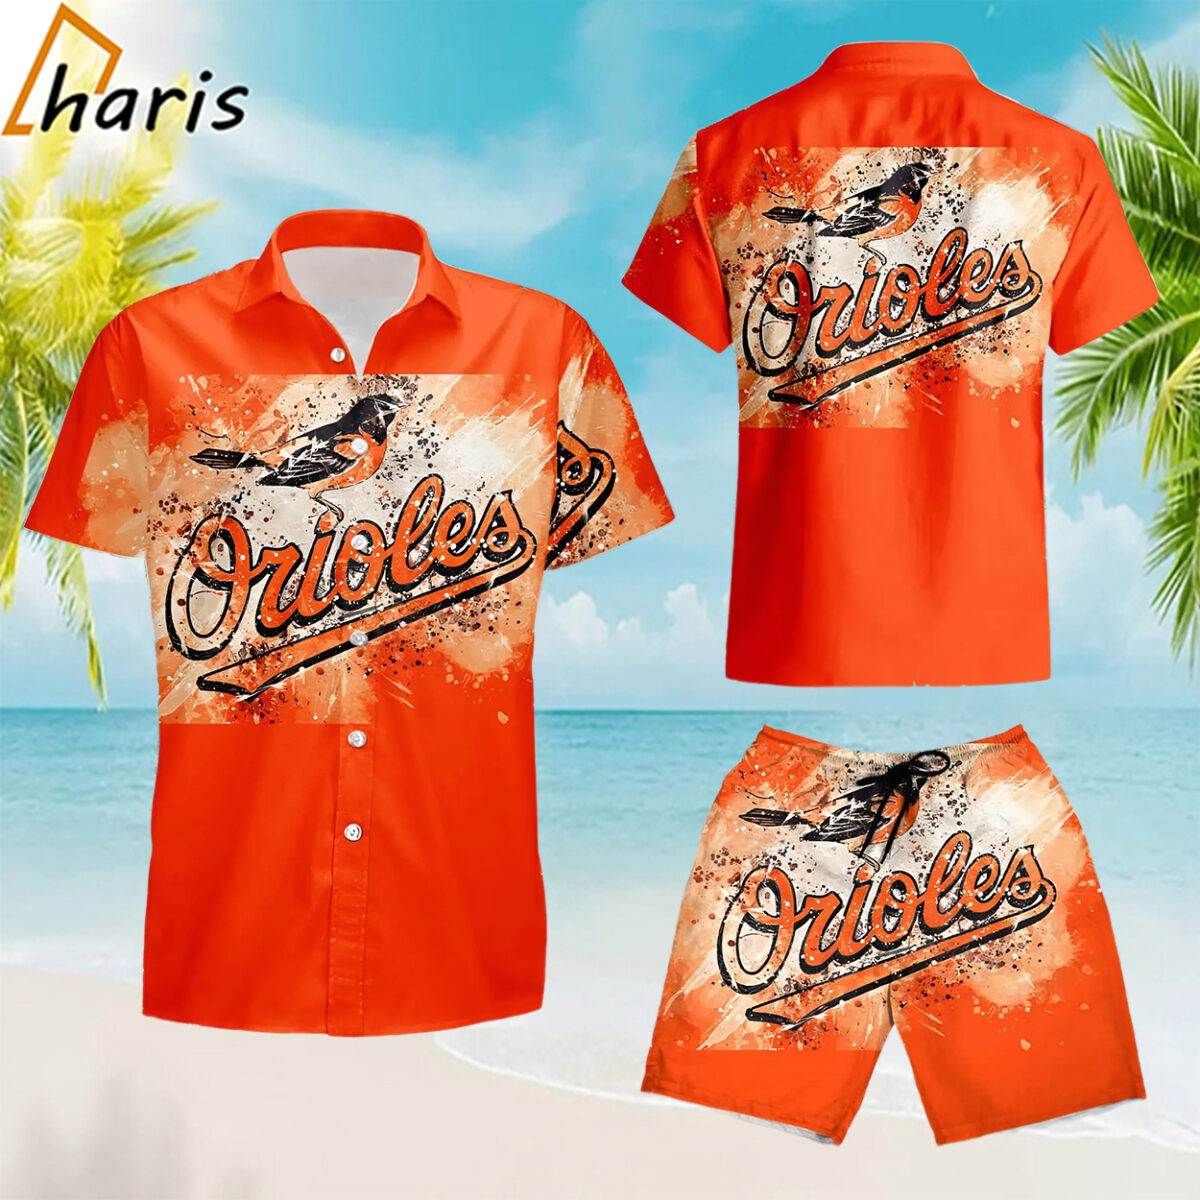 The Orioles Are Giving Away Hawaiian Shirts1